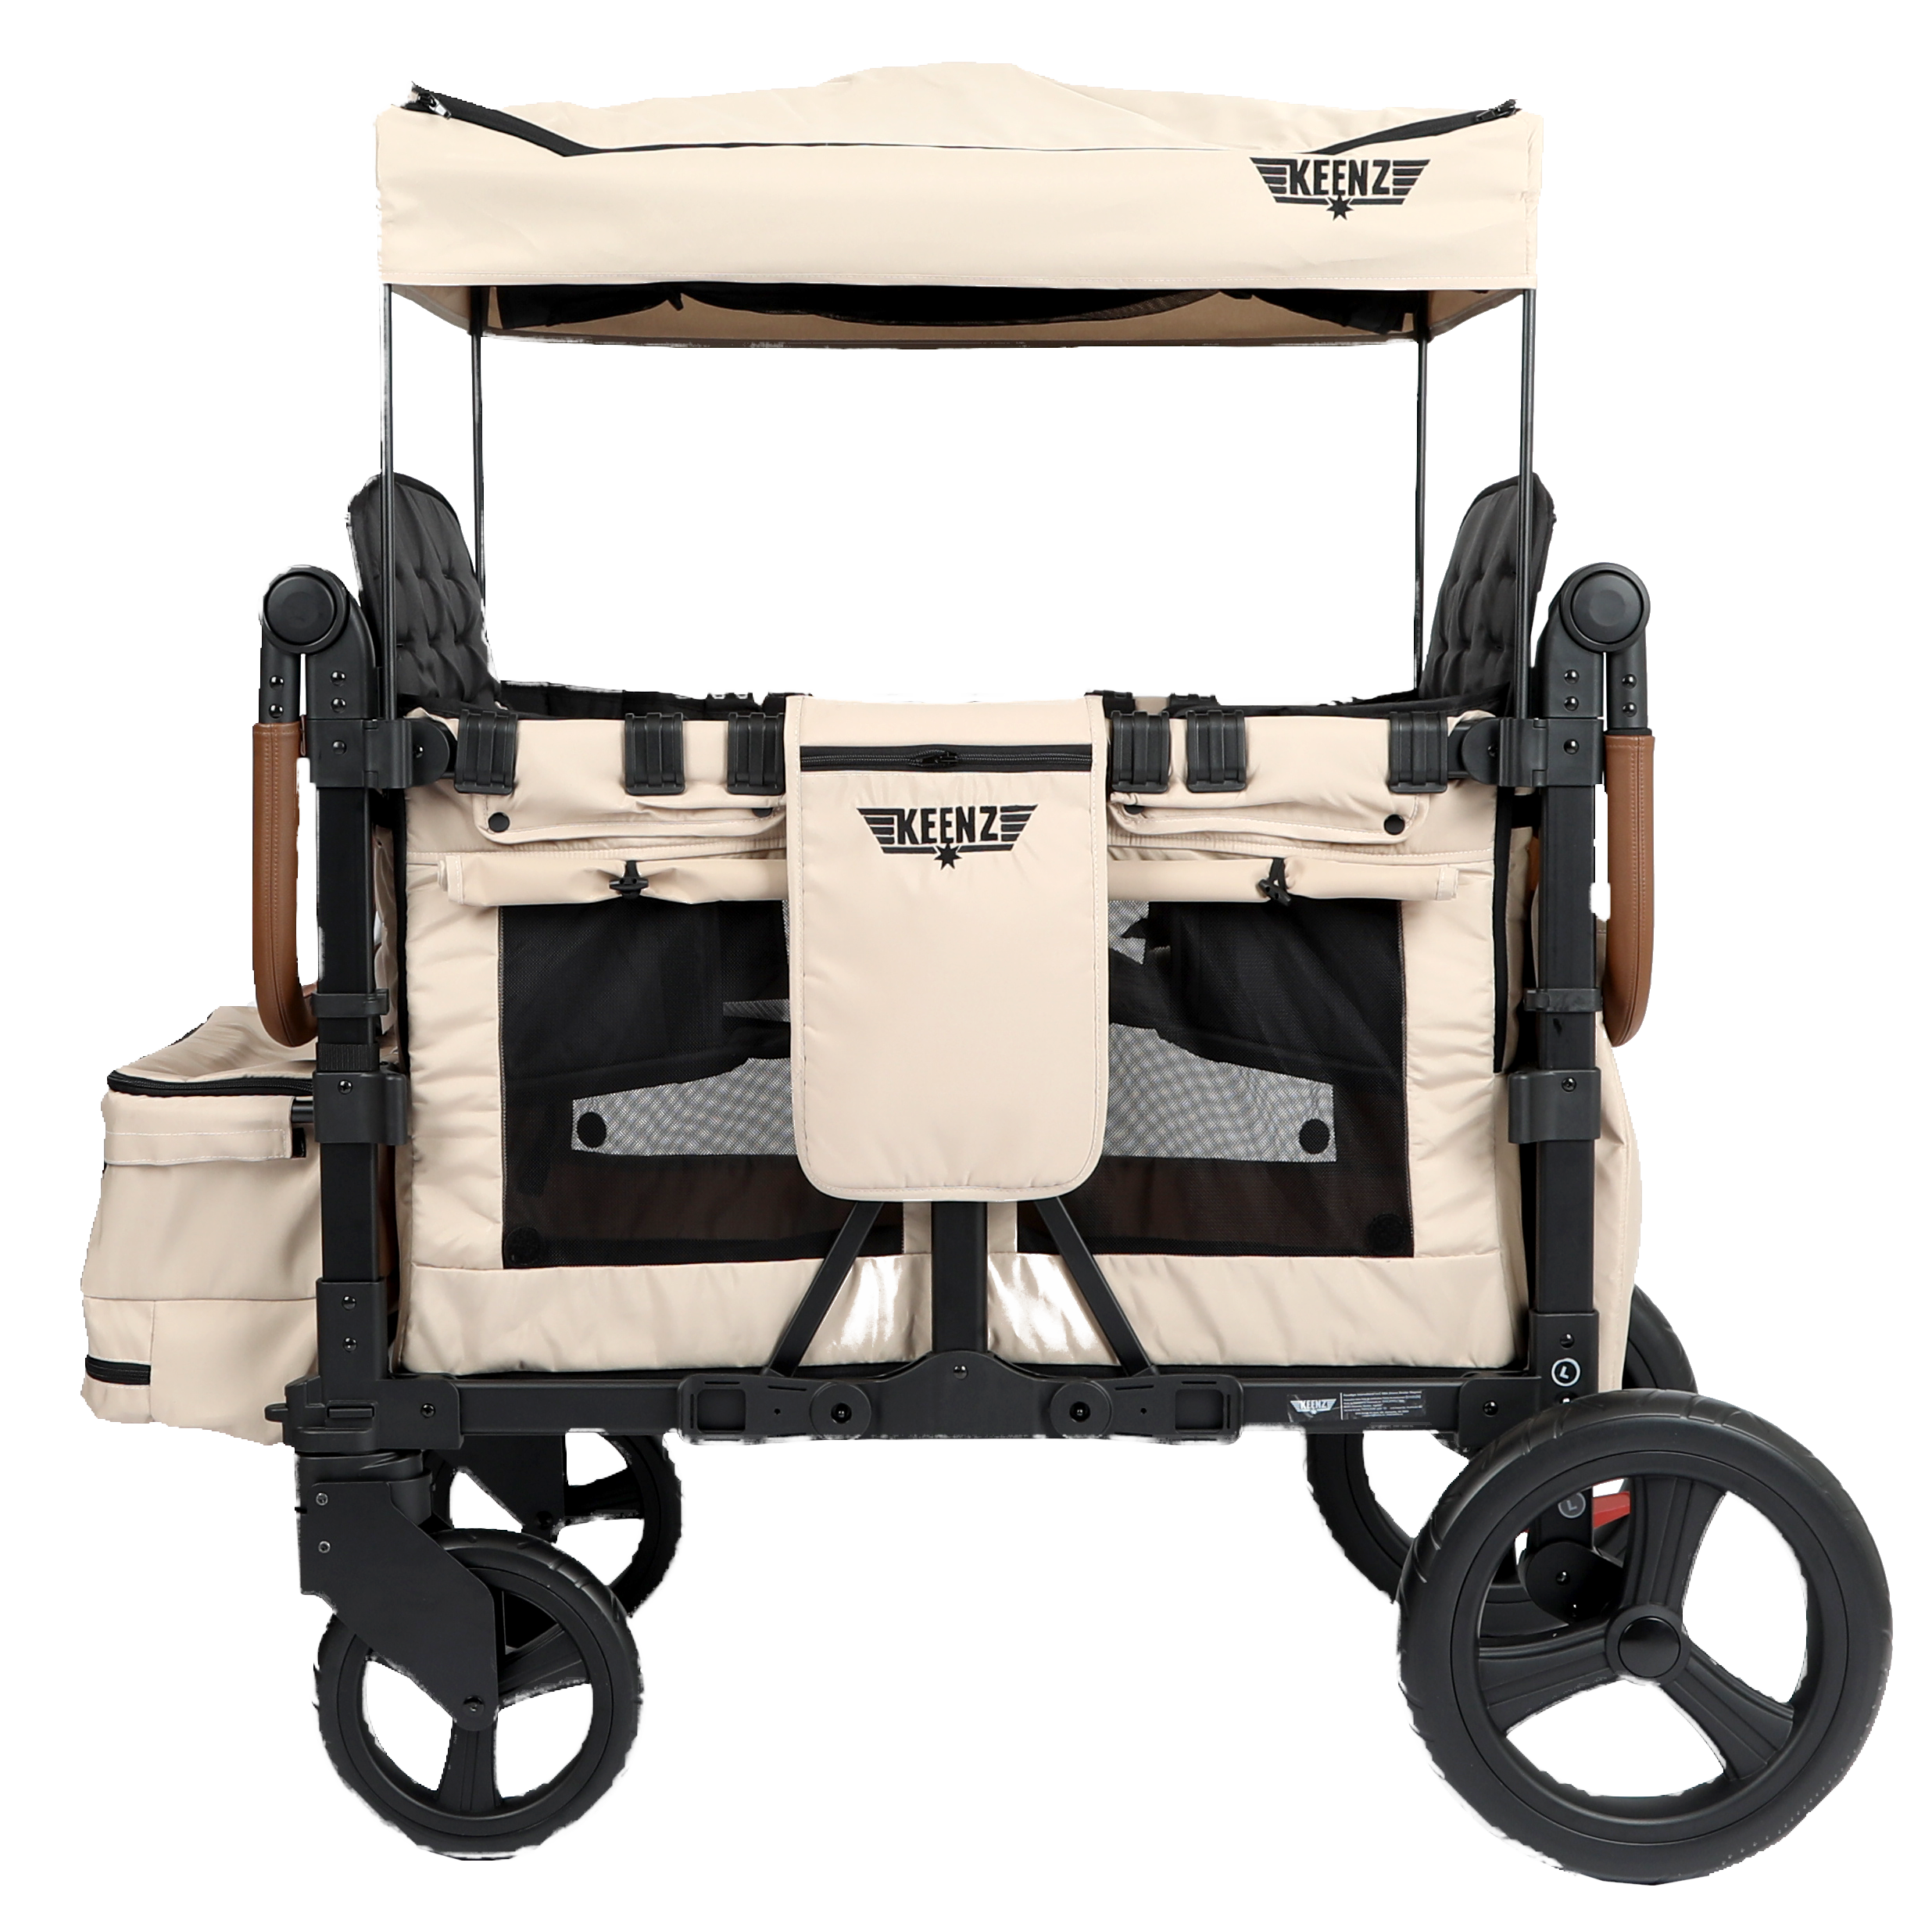 Keenz Vyo͞o The Seating Chameleon Stroller Wagon 4-passengers